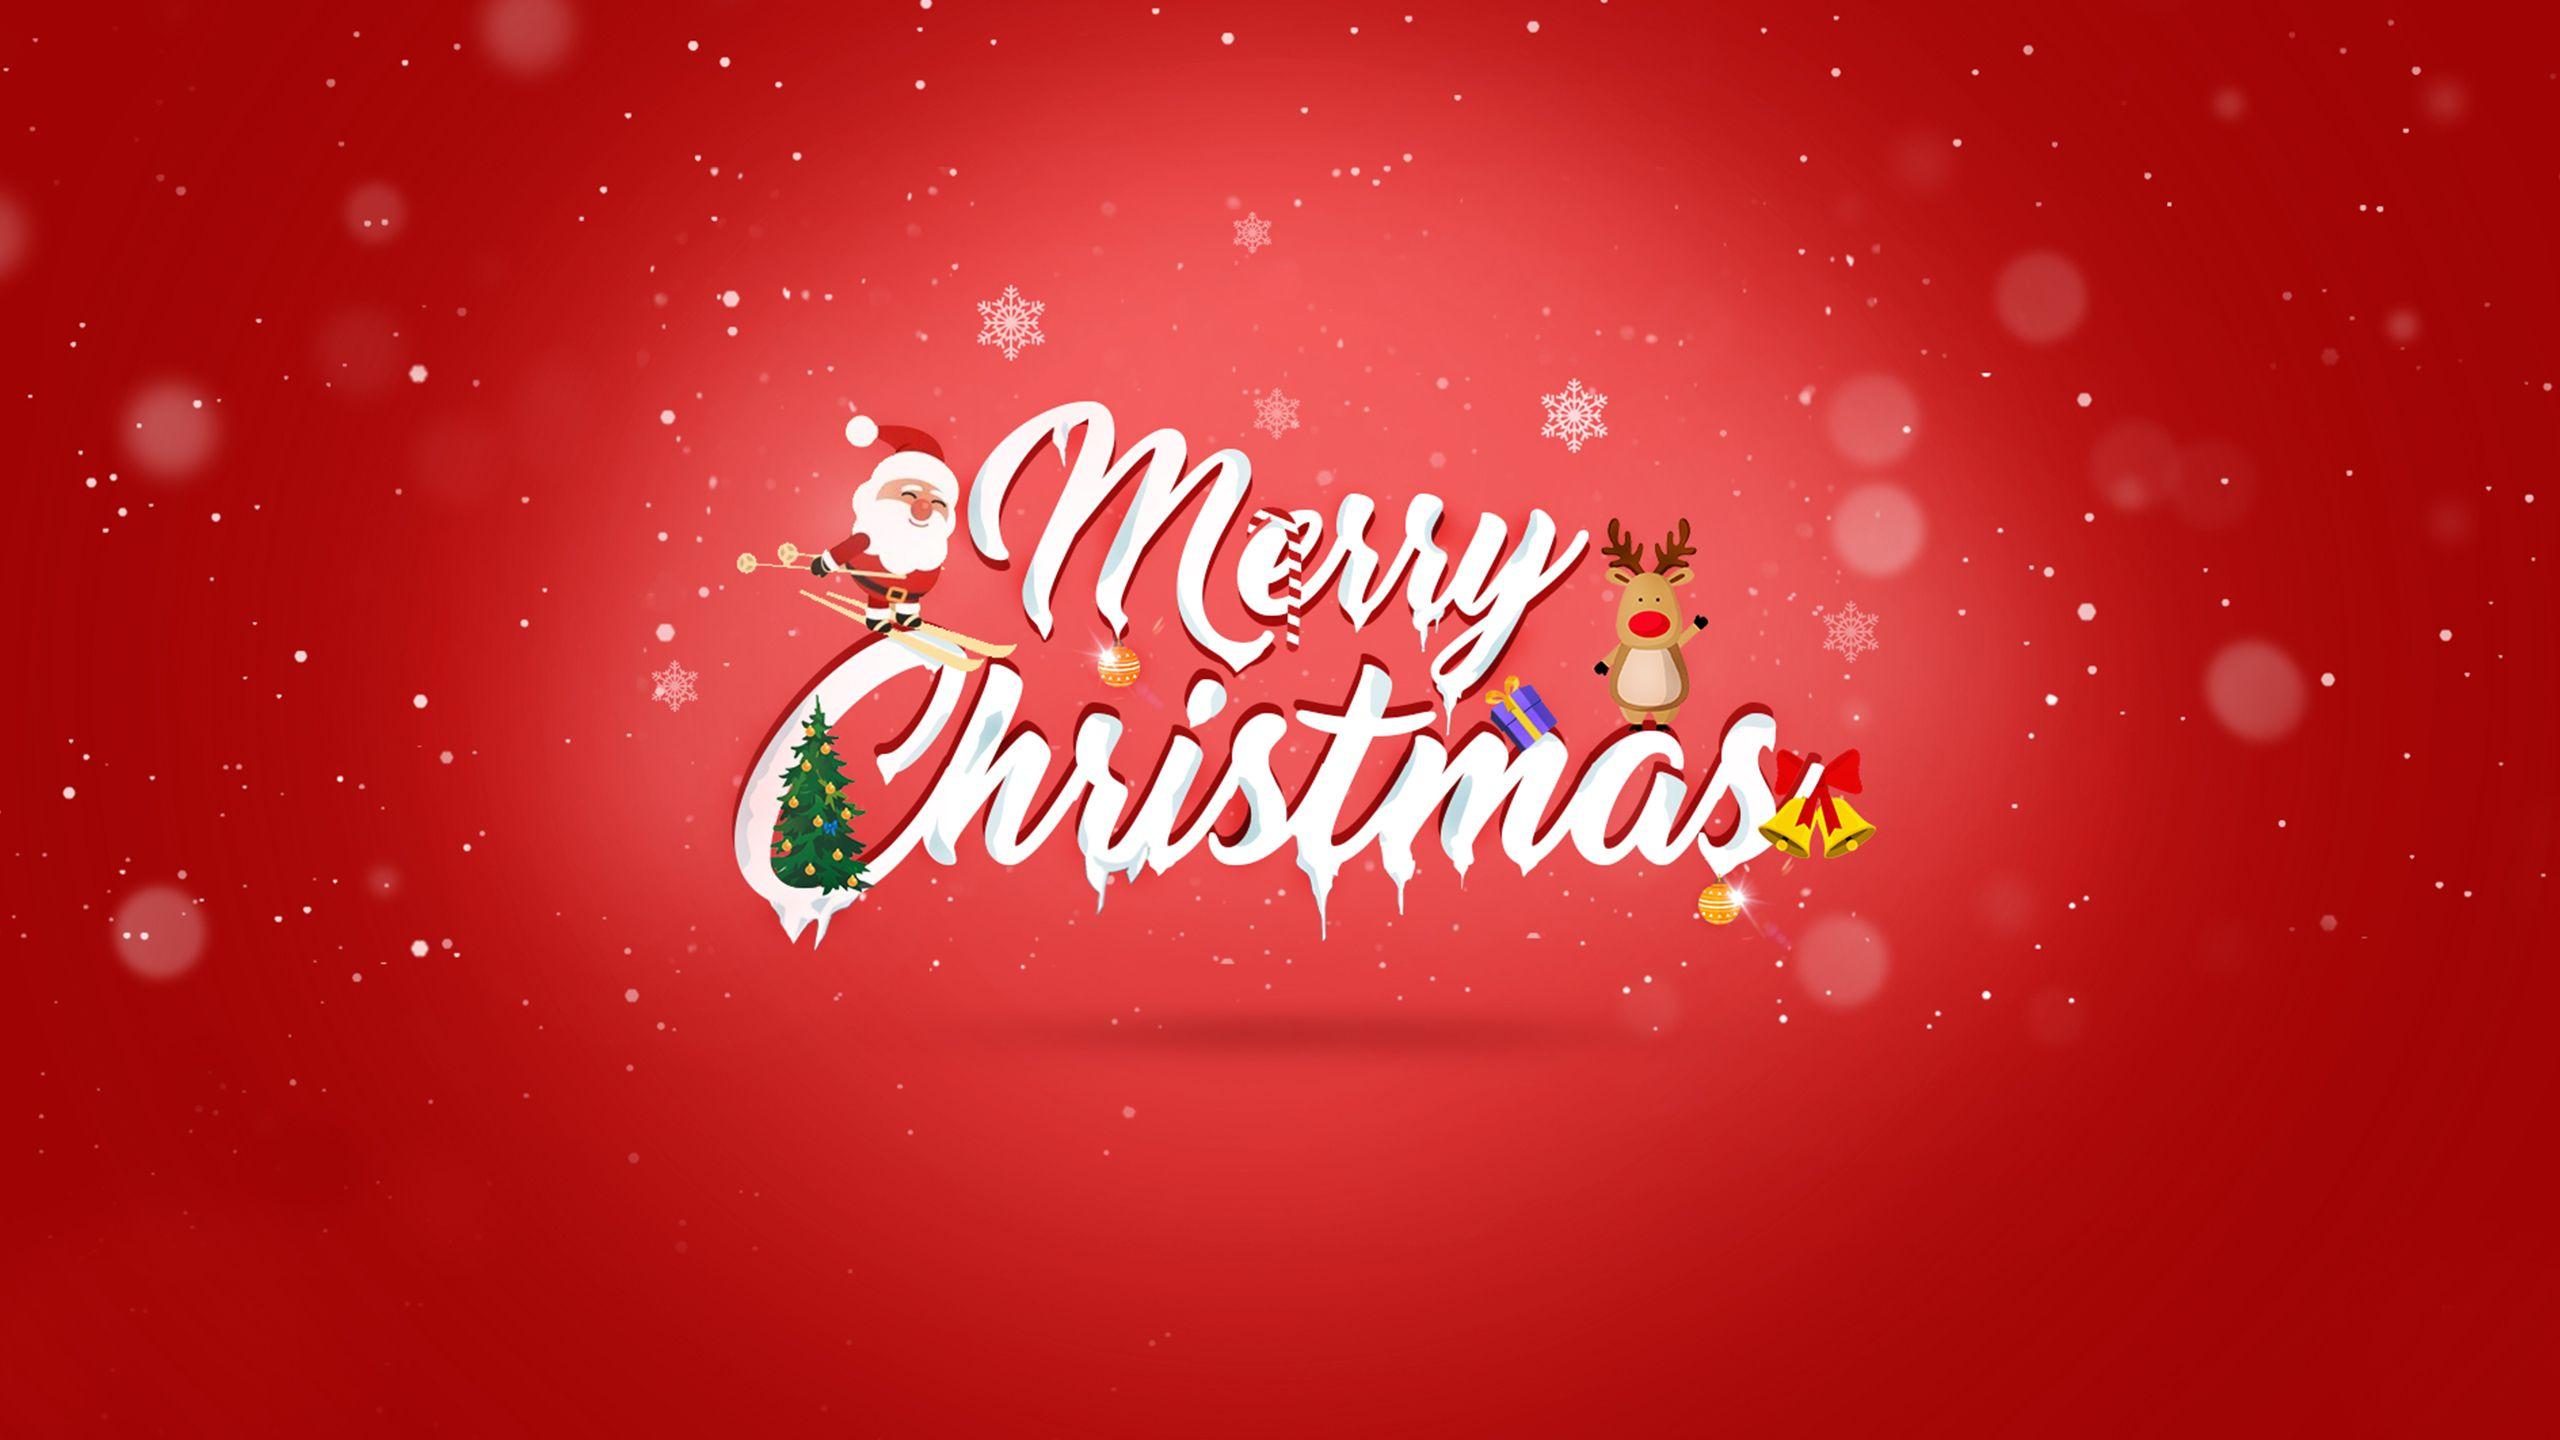 Merry Christmas Hd Wallpapers 1080p : Christmas Hd Wallpapers 1080p (72 ...